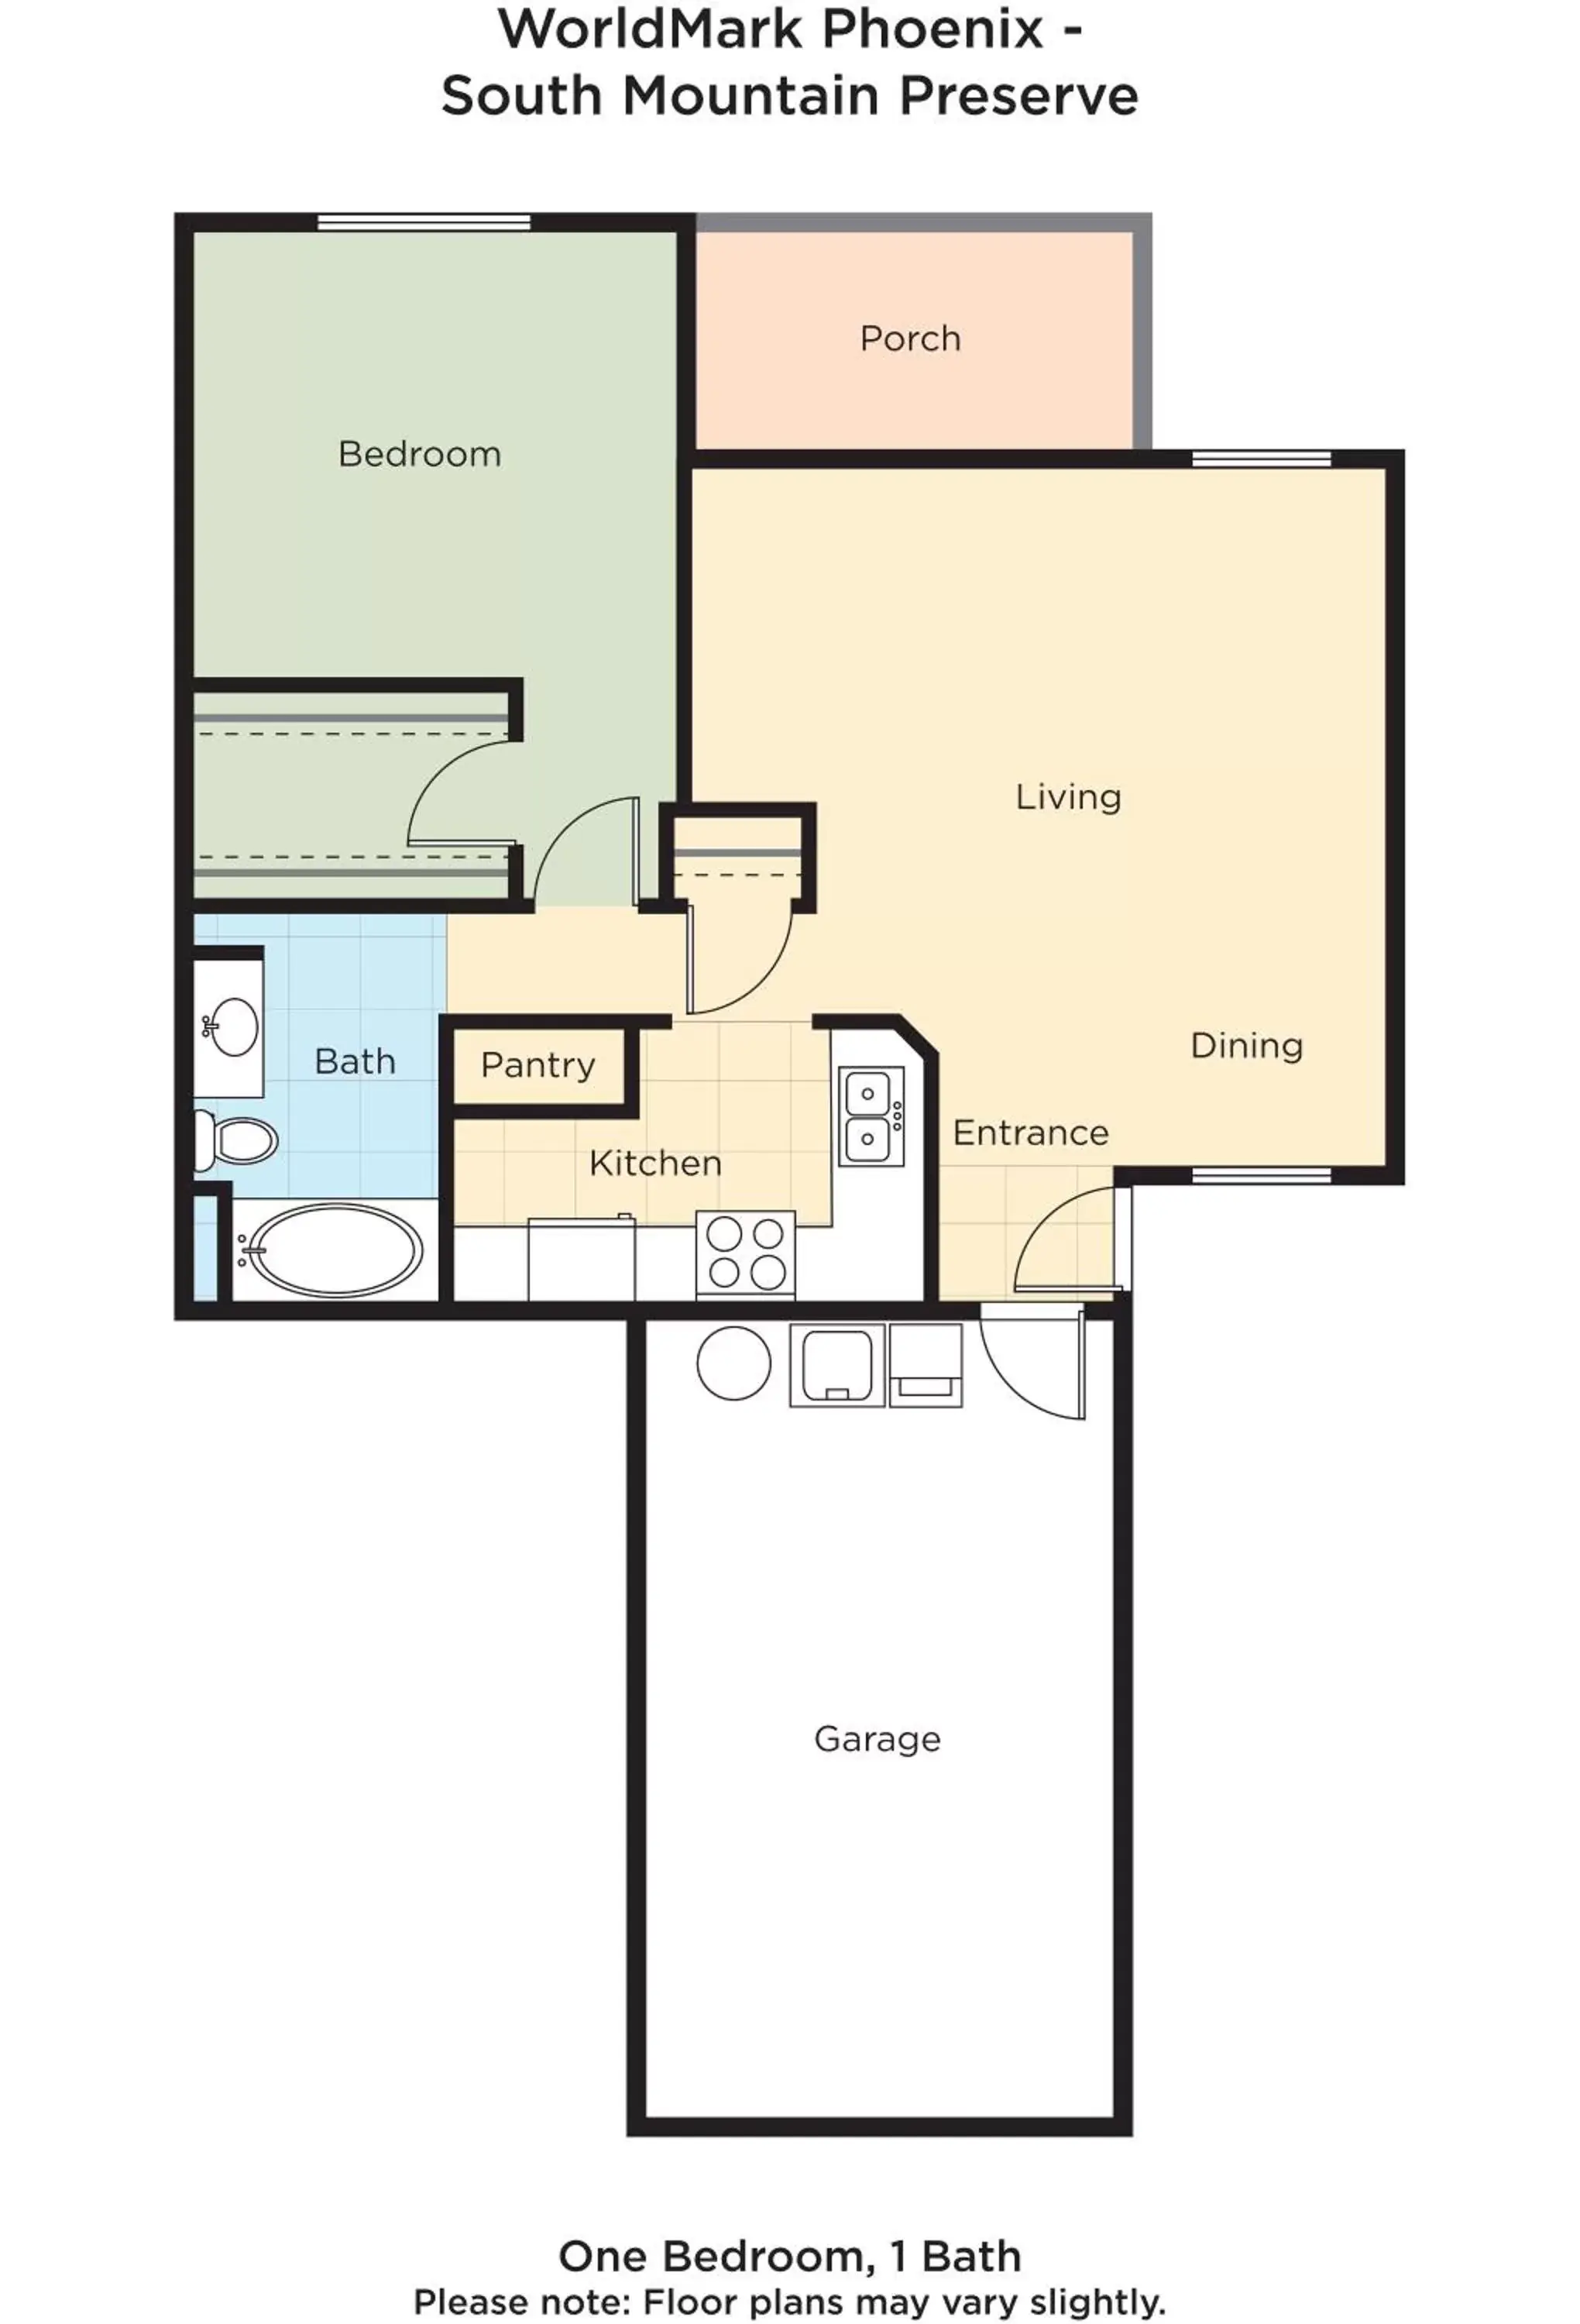 Floor Plan in Peacock Suites